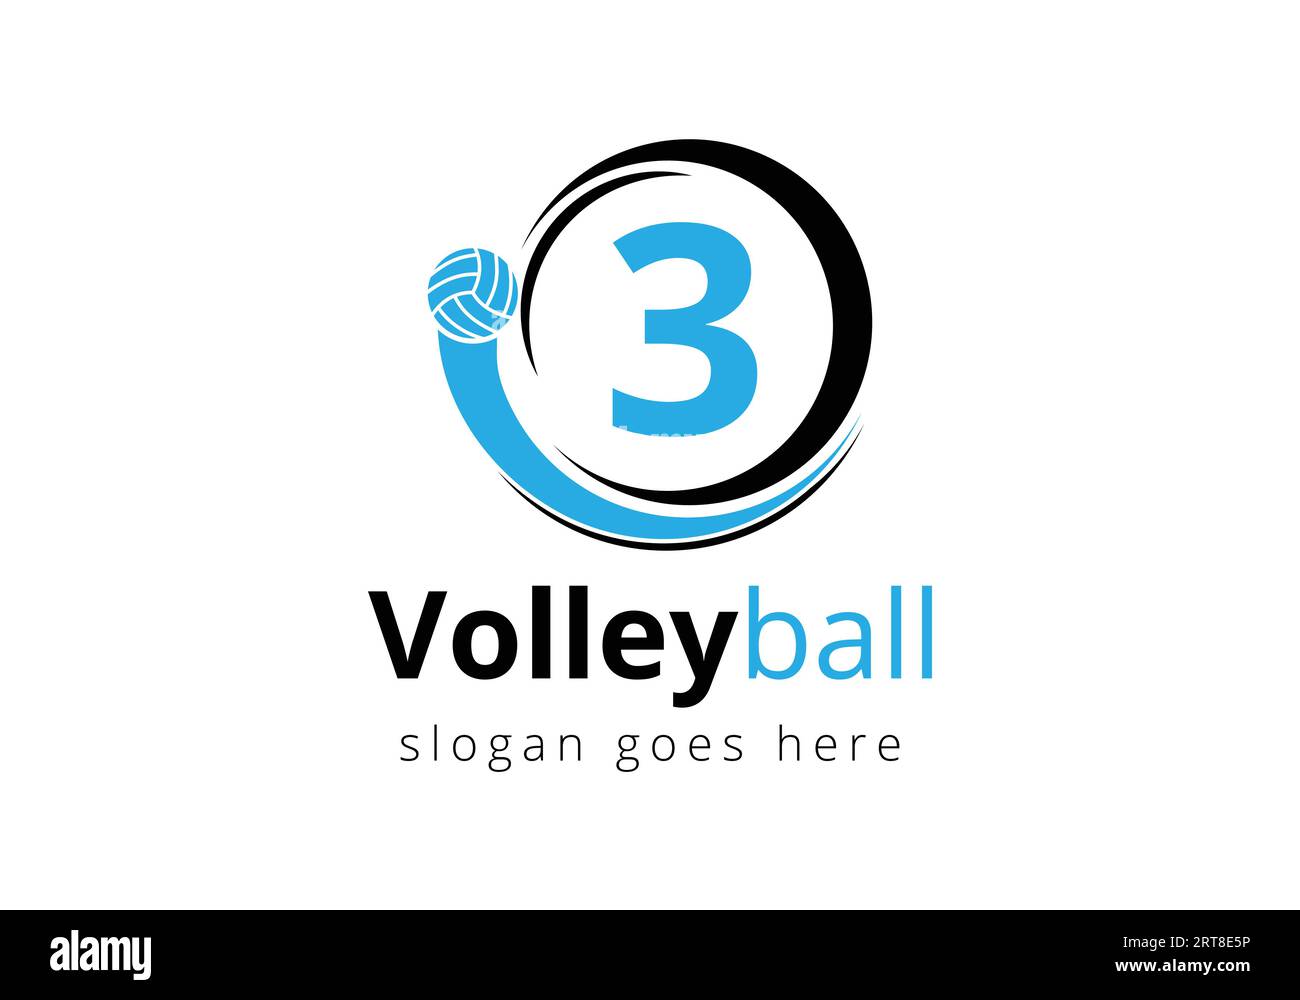 Erster Buchstabe 3 Volleyball-Logo-Konzept. Vektorvorlage Für Volleyball-Sportsymbol Stock Vektor